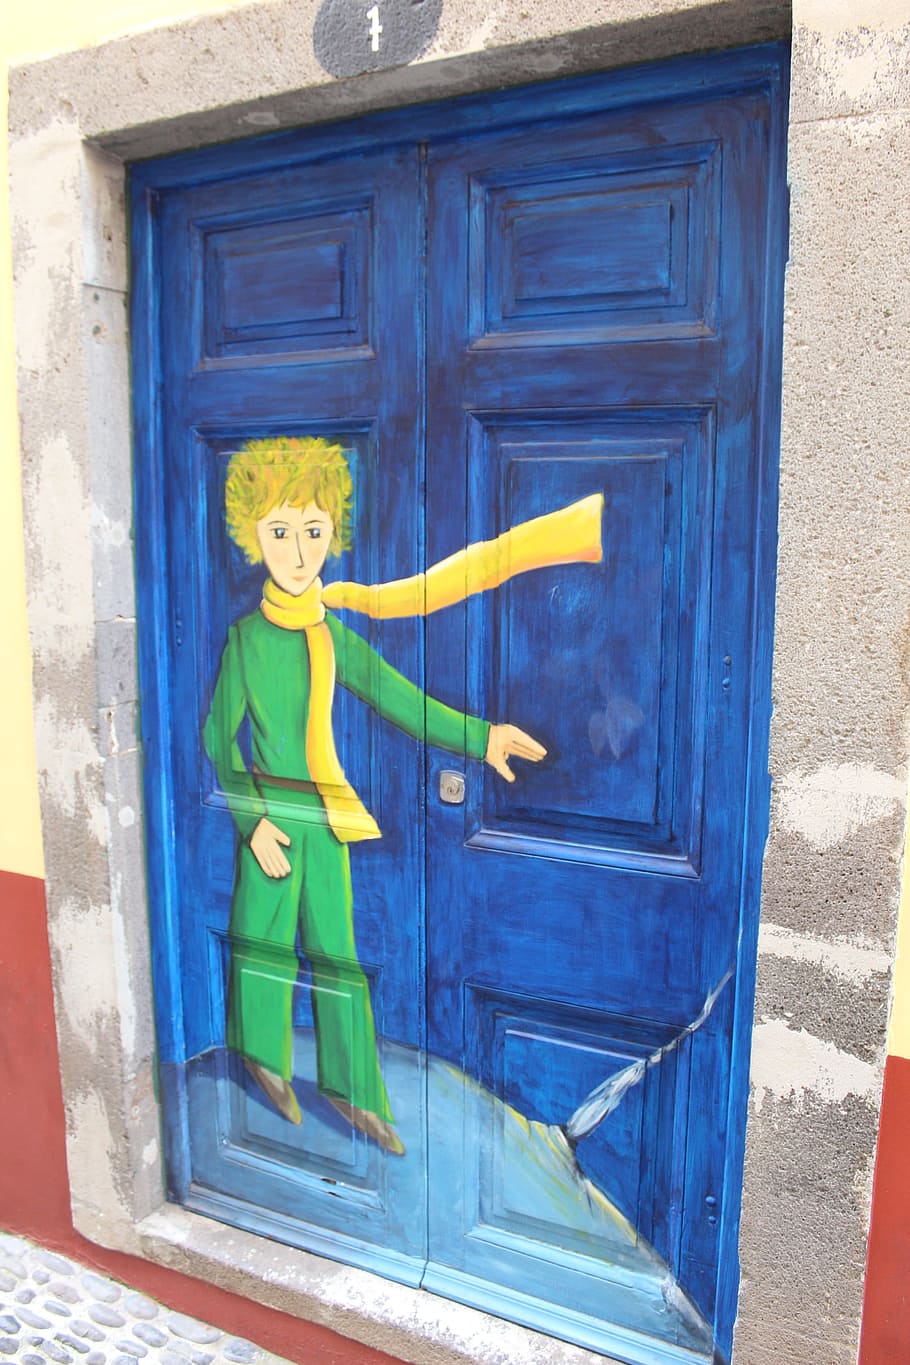 Door, Little Prince, Saint Exupery, window, blue, day, outdoors, representation, human representation, entrance